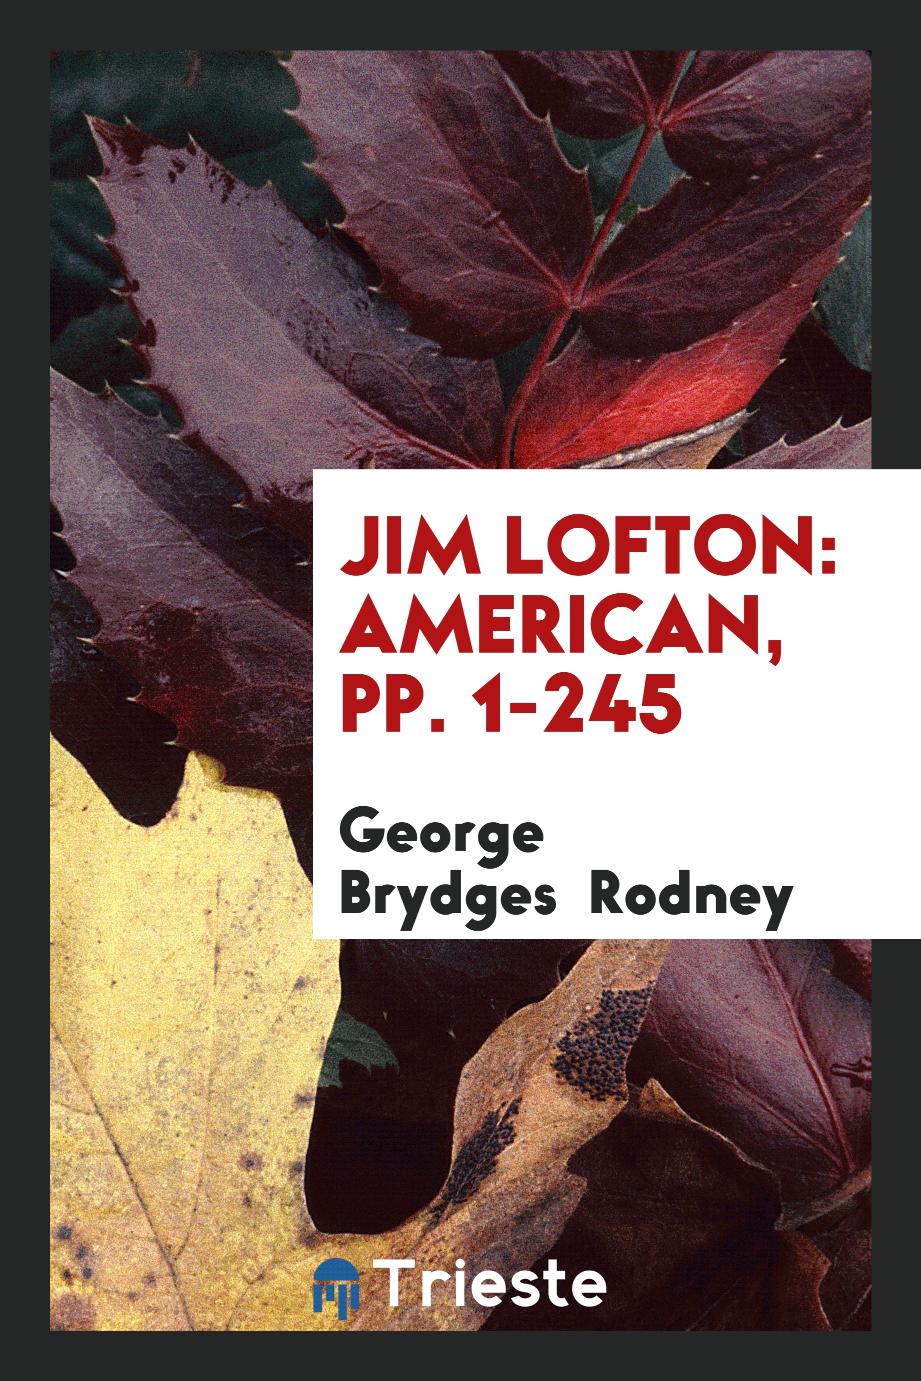 Jim Lofton: American, pp. 1-245